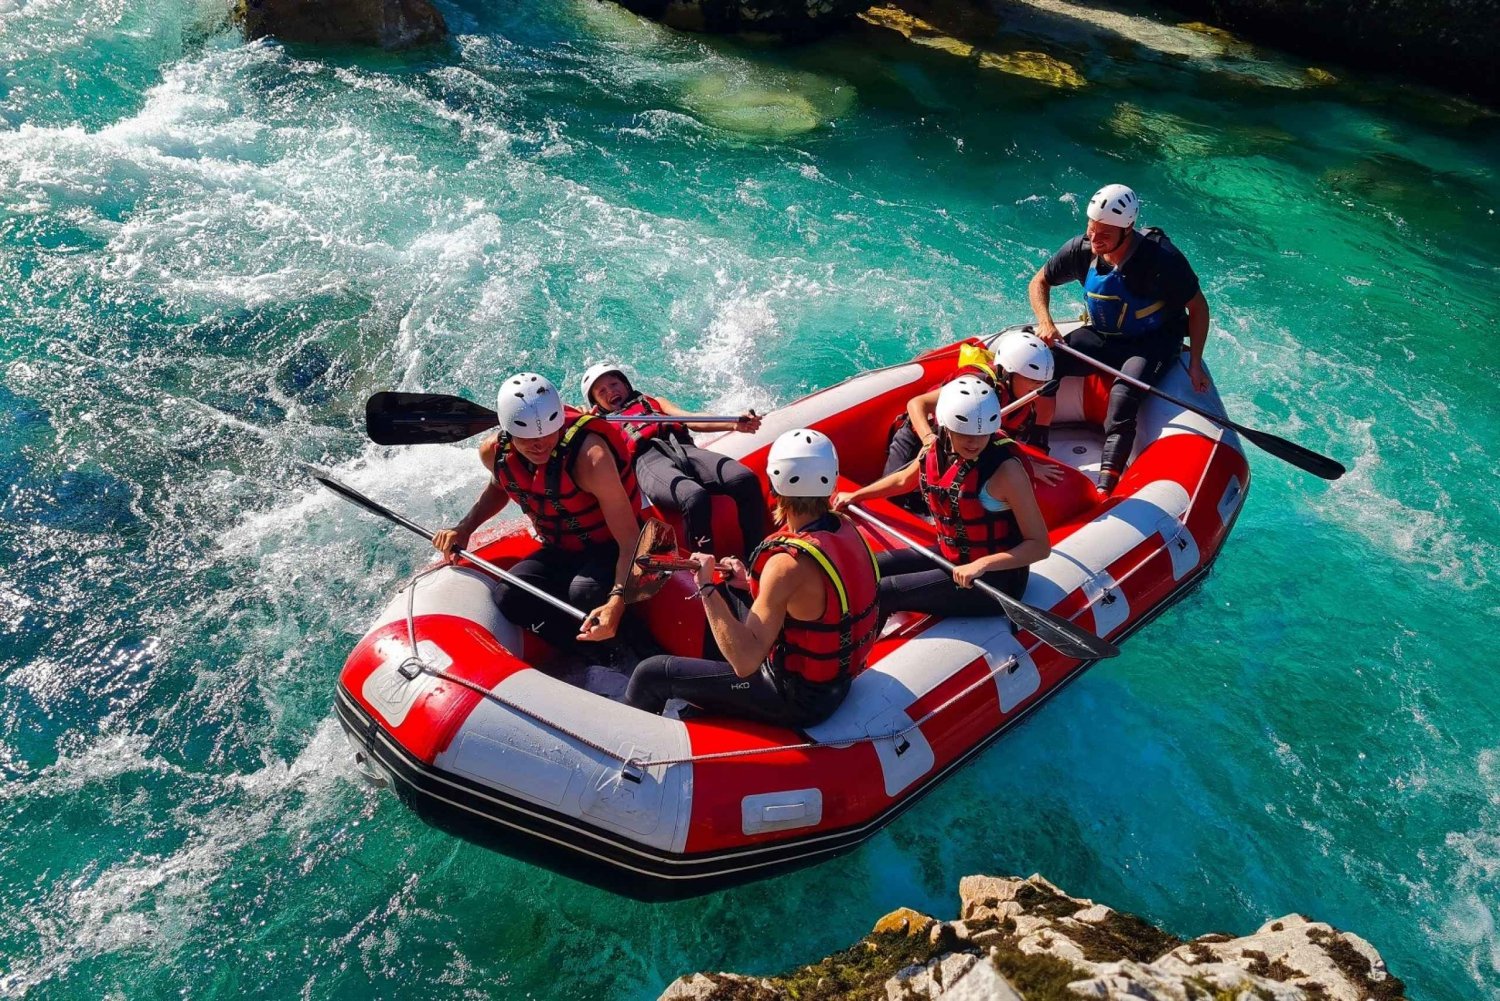 Soca River, Slovenia: Whitewater Rafting